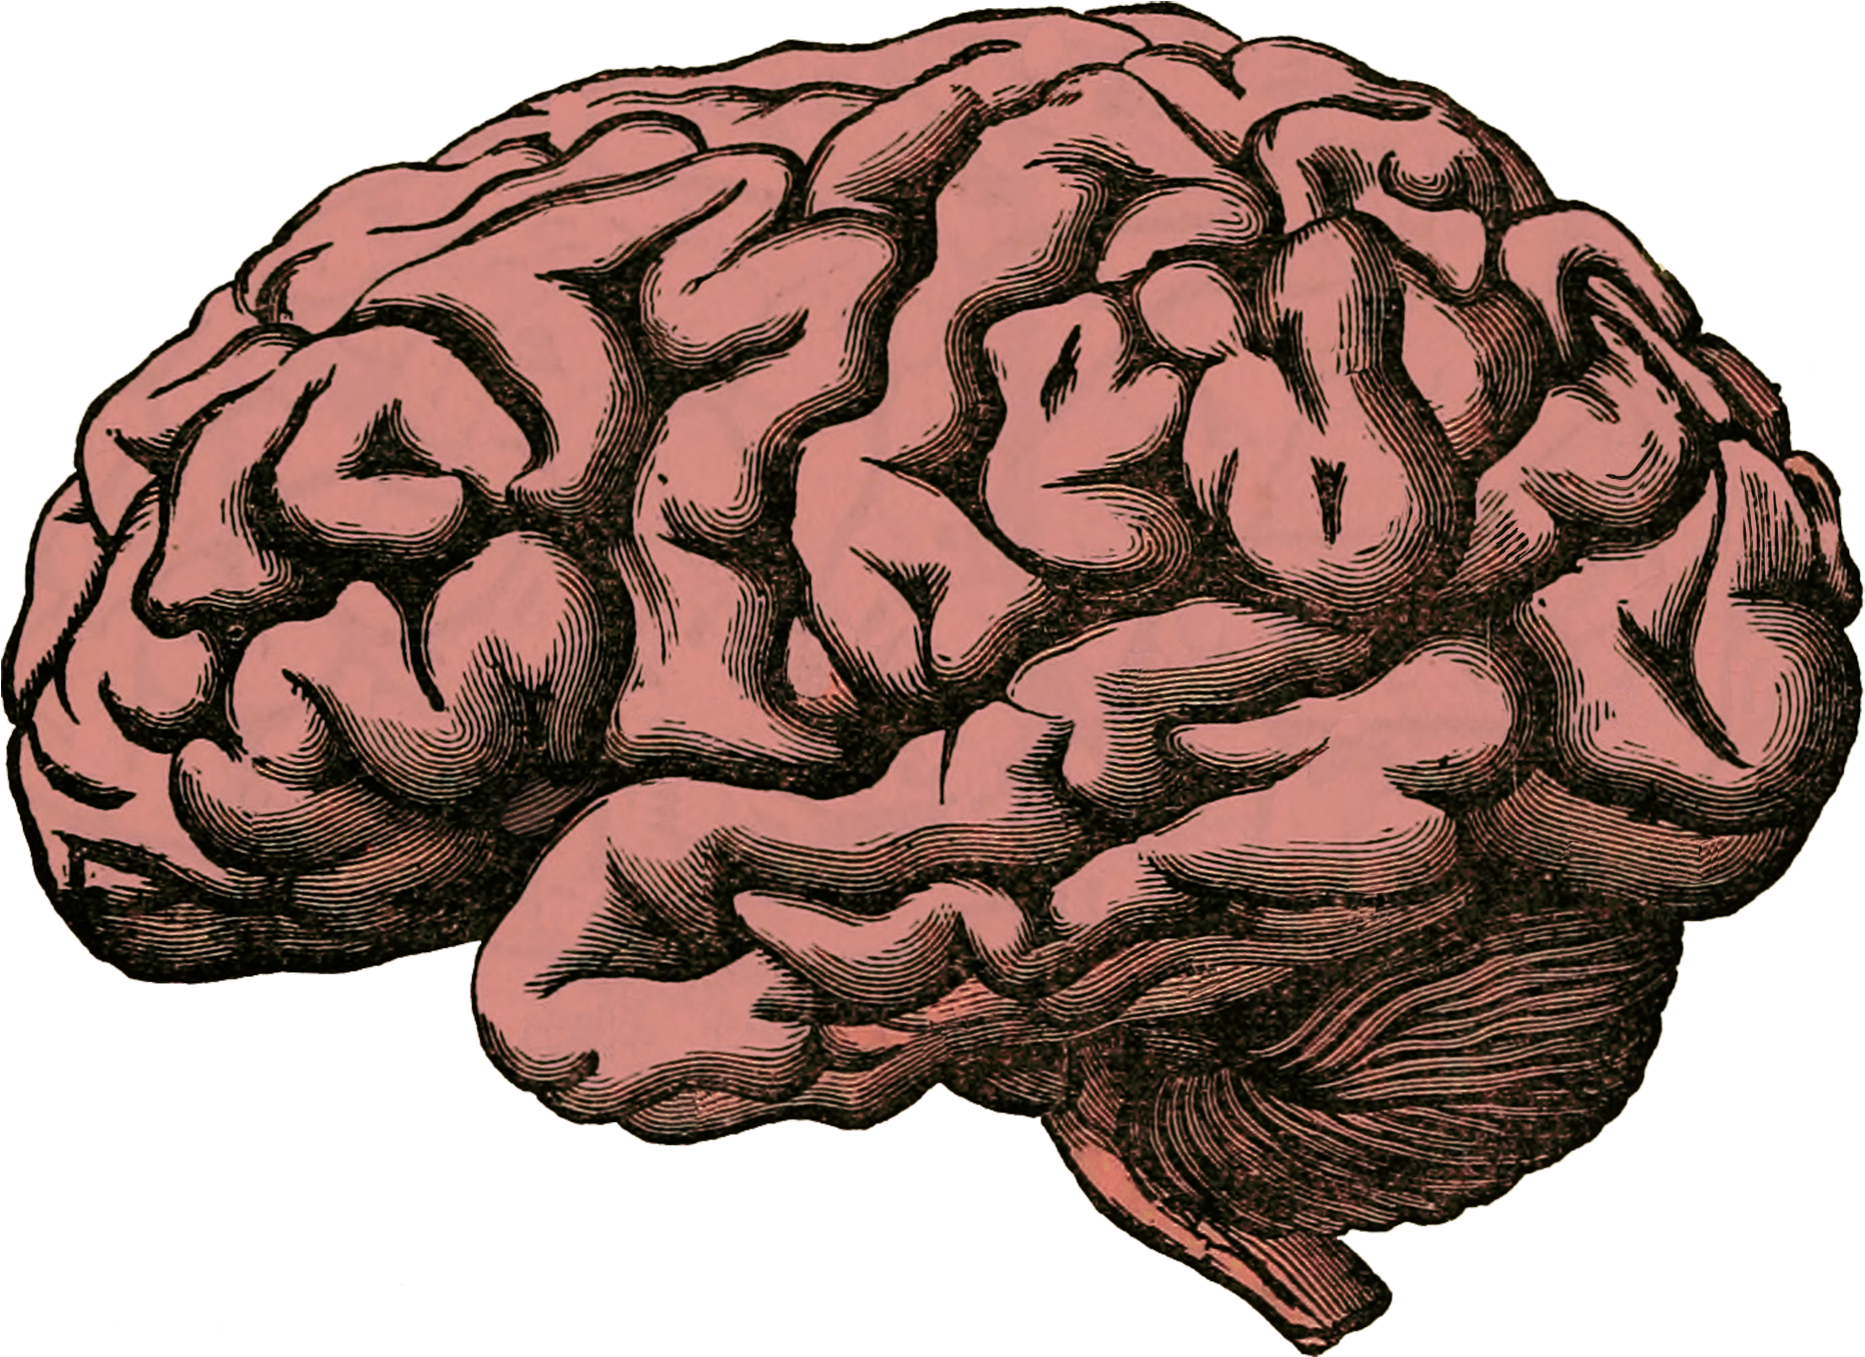 Cérebro